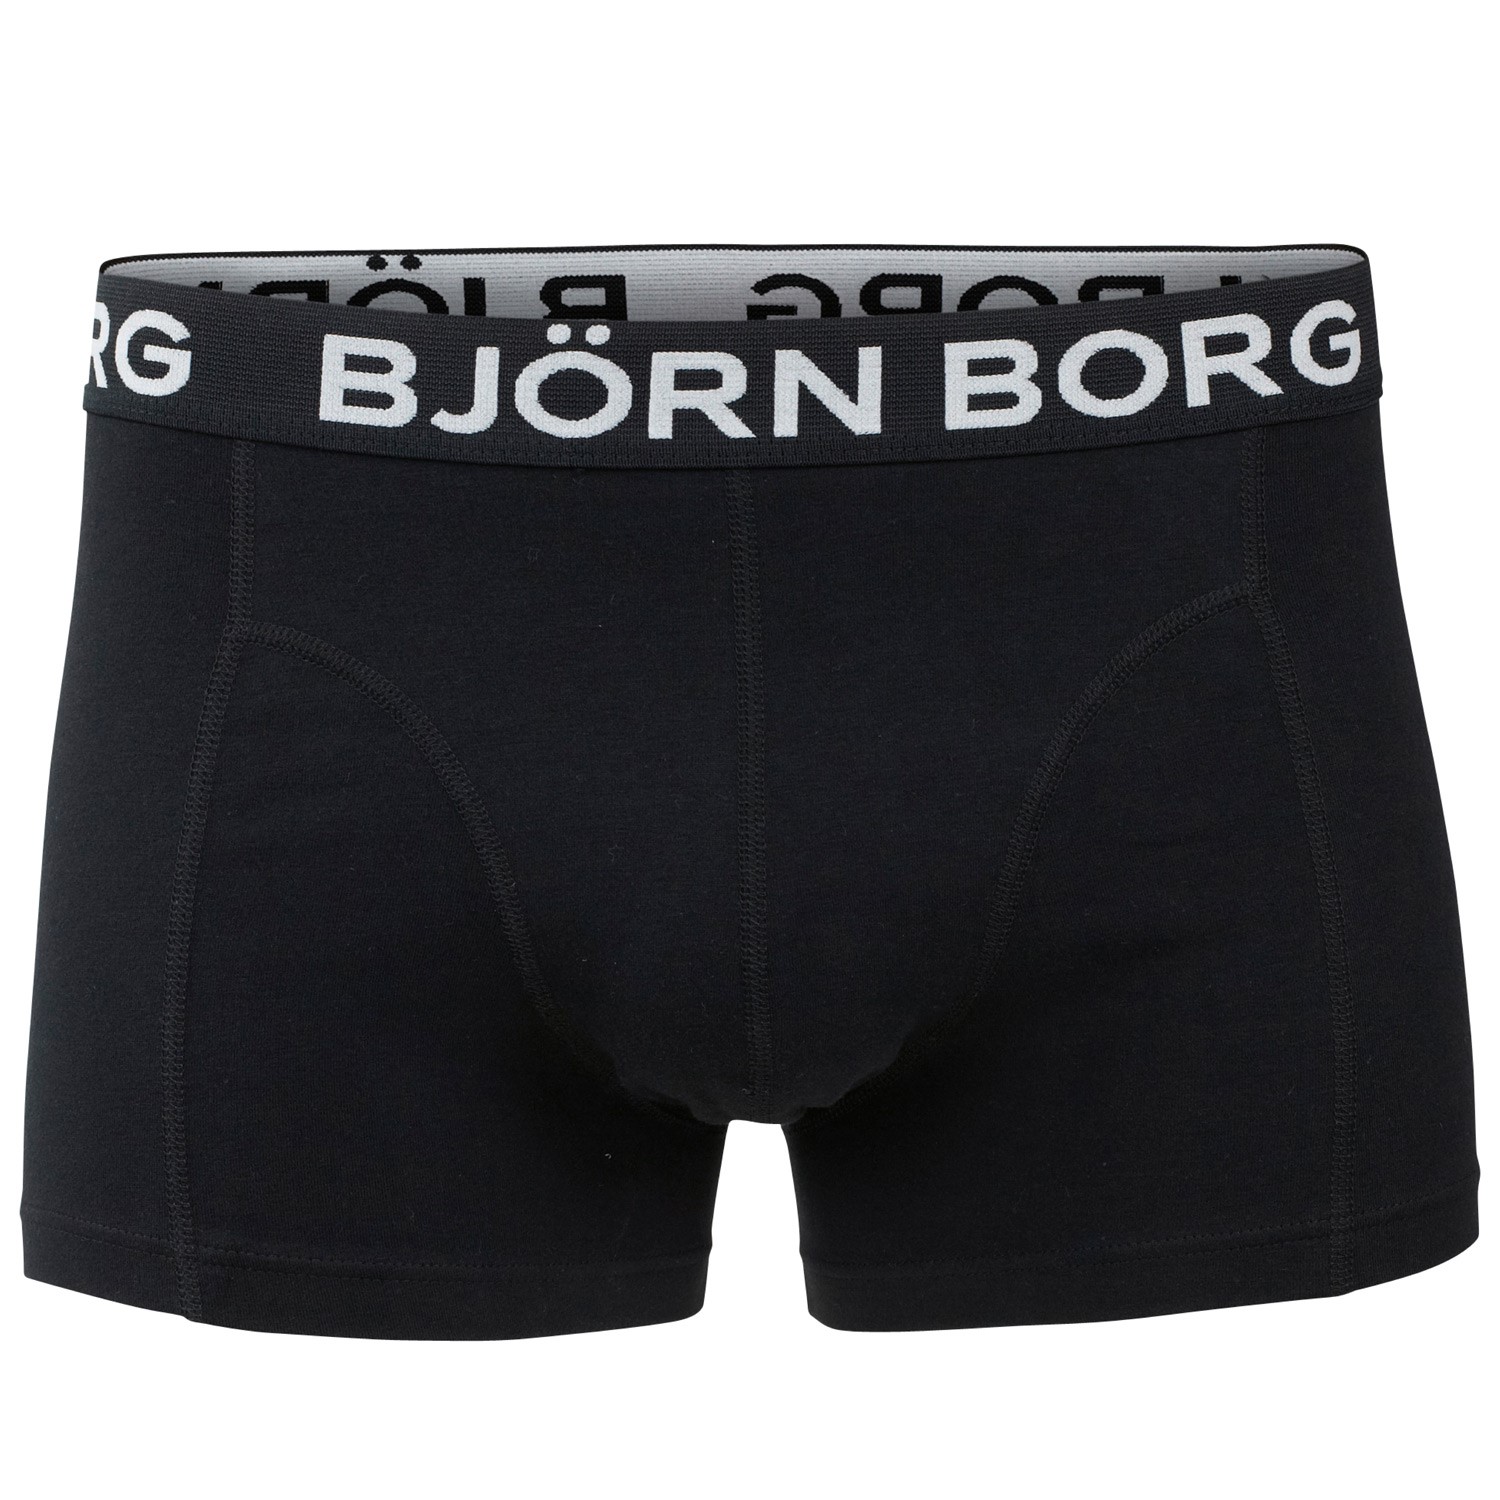 Björn Borg Short Shorts 90011